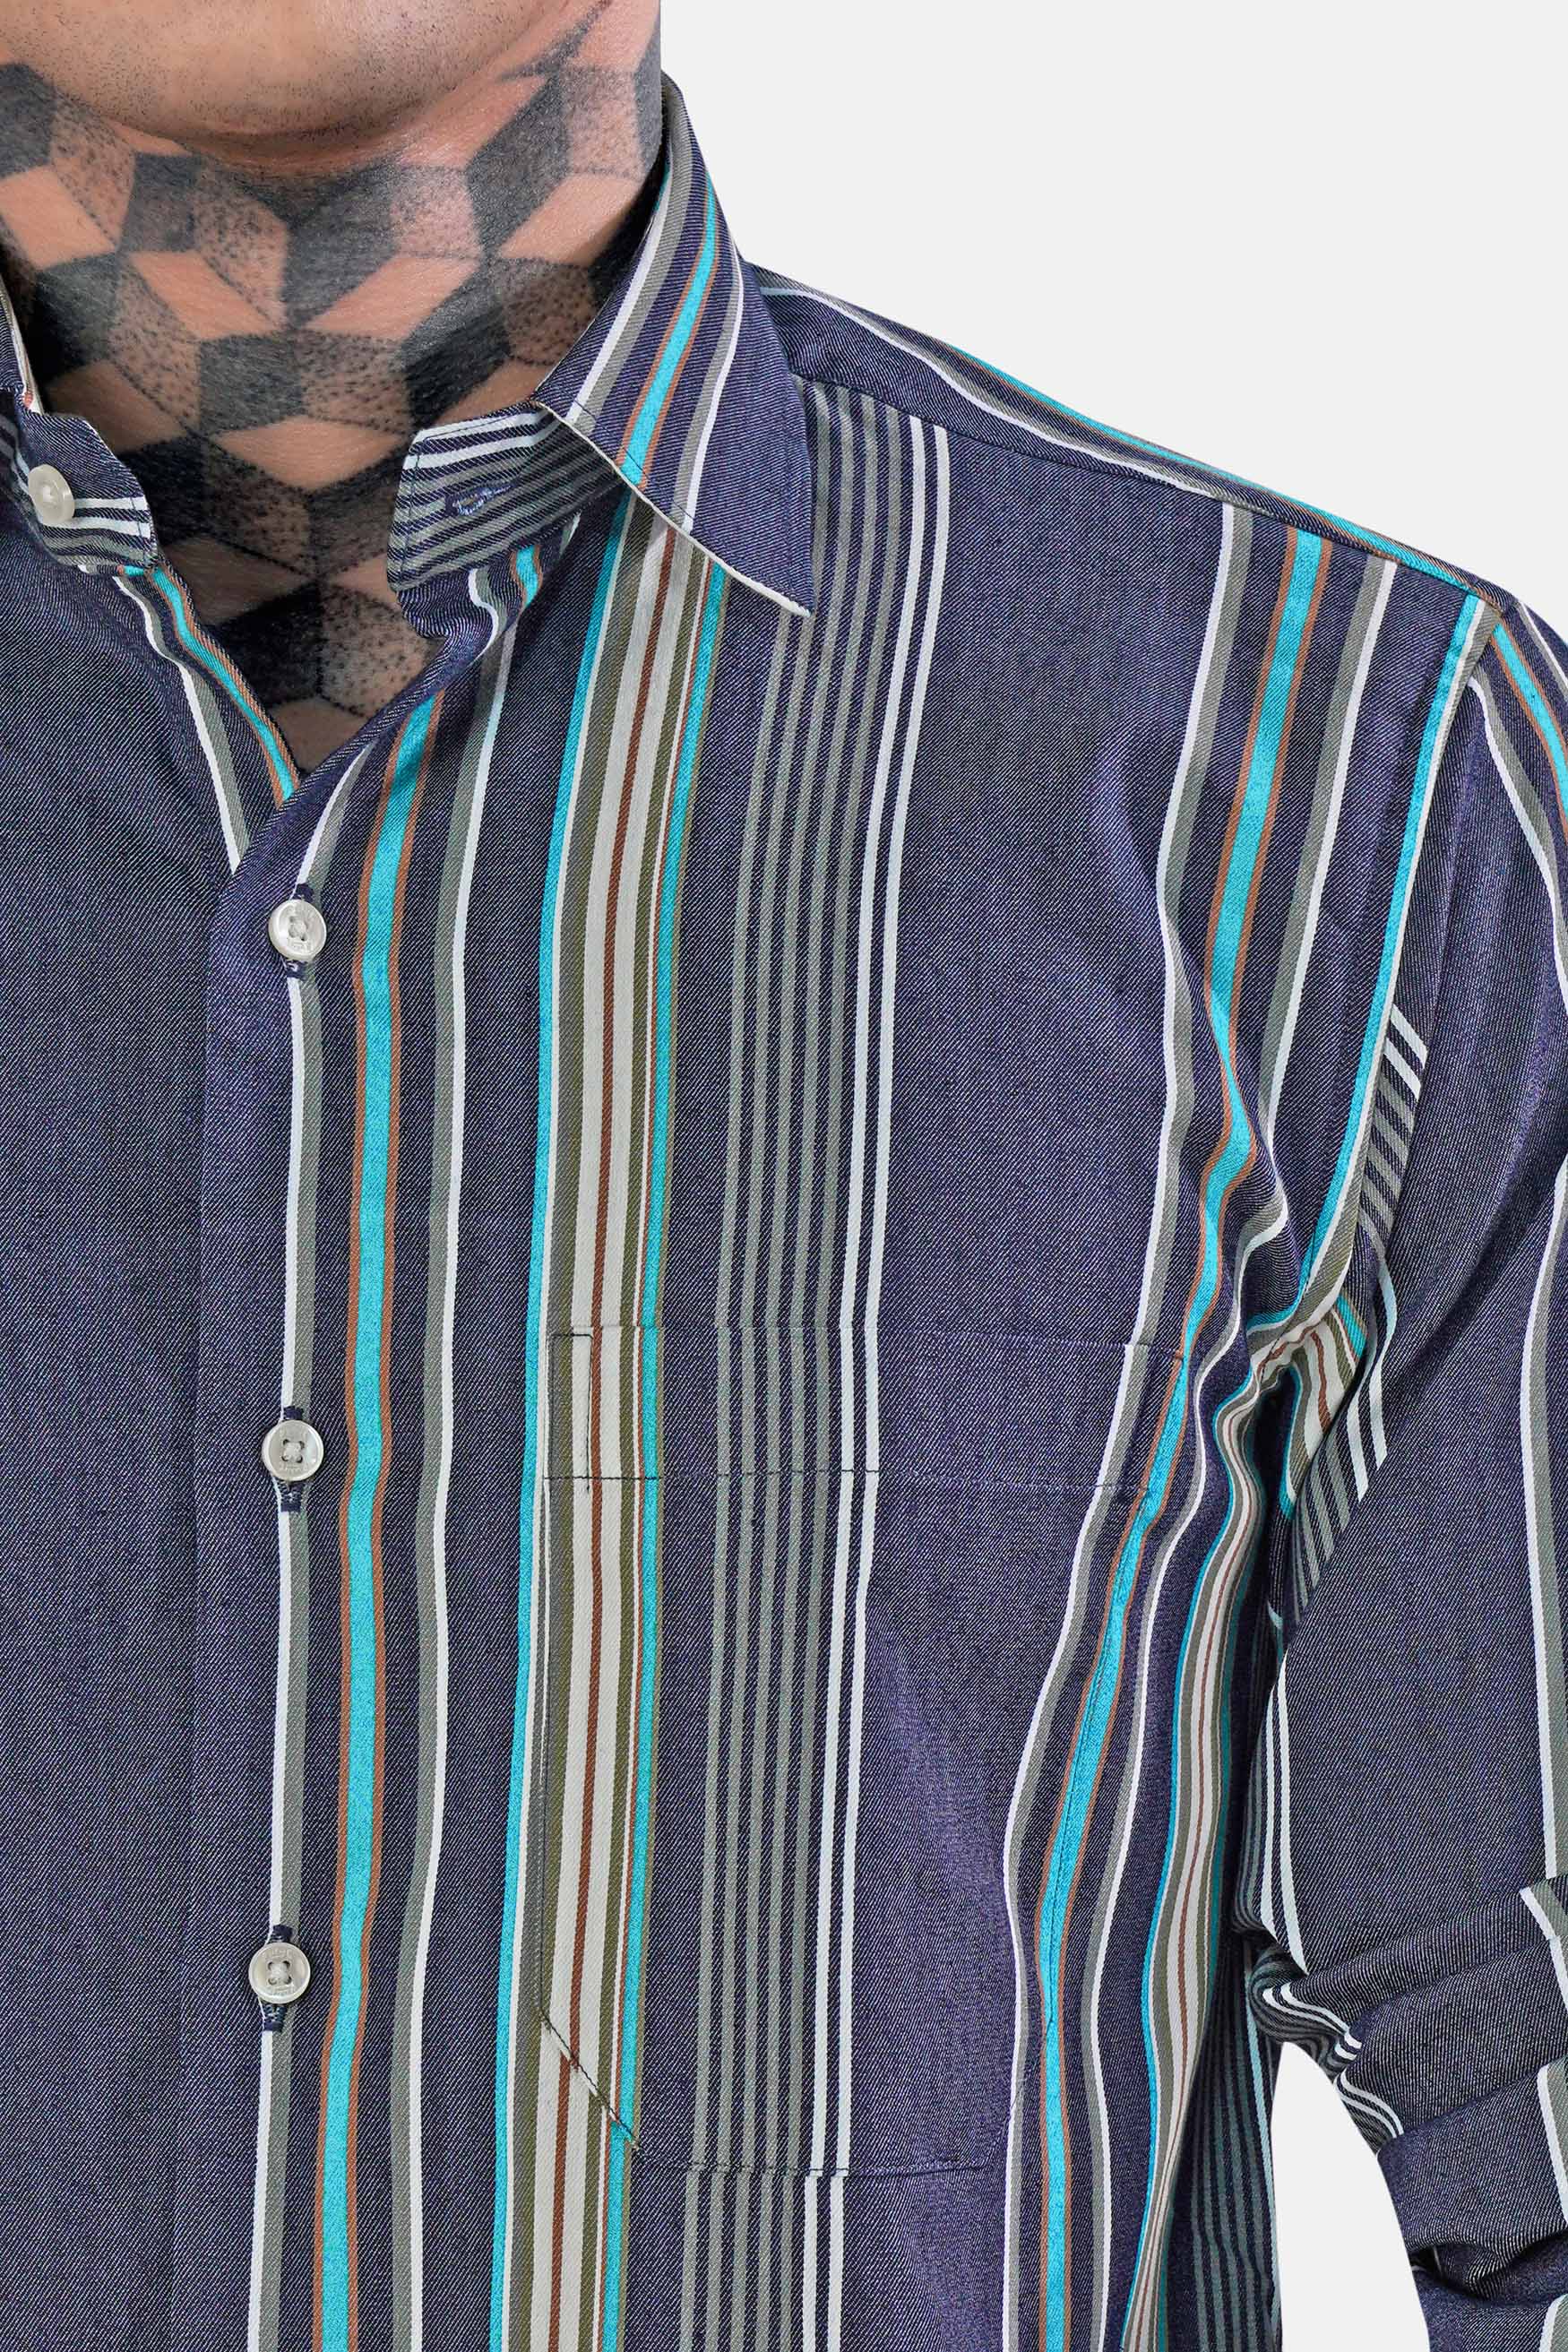 Can We Wear Denim Shirts in the Summer? A Guide to Styling Denim Shirts for  Men - Trishabansal - Medium